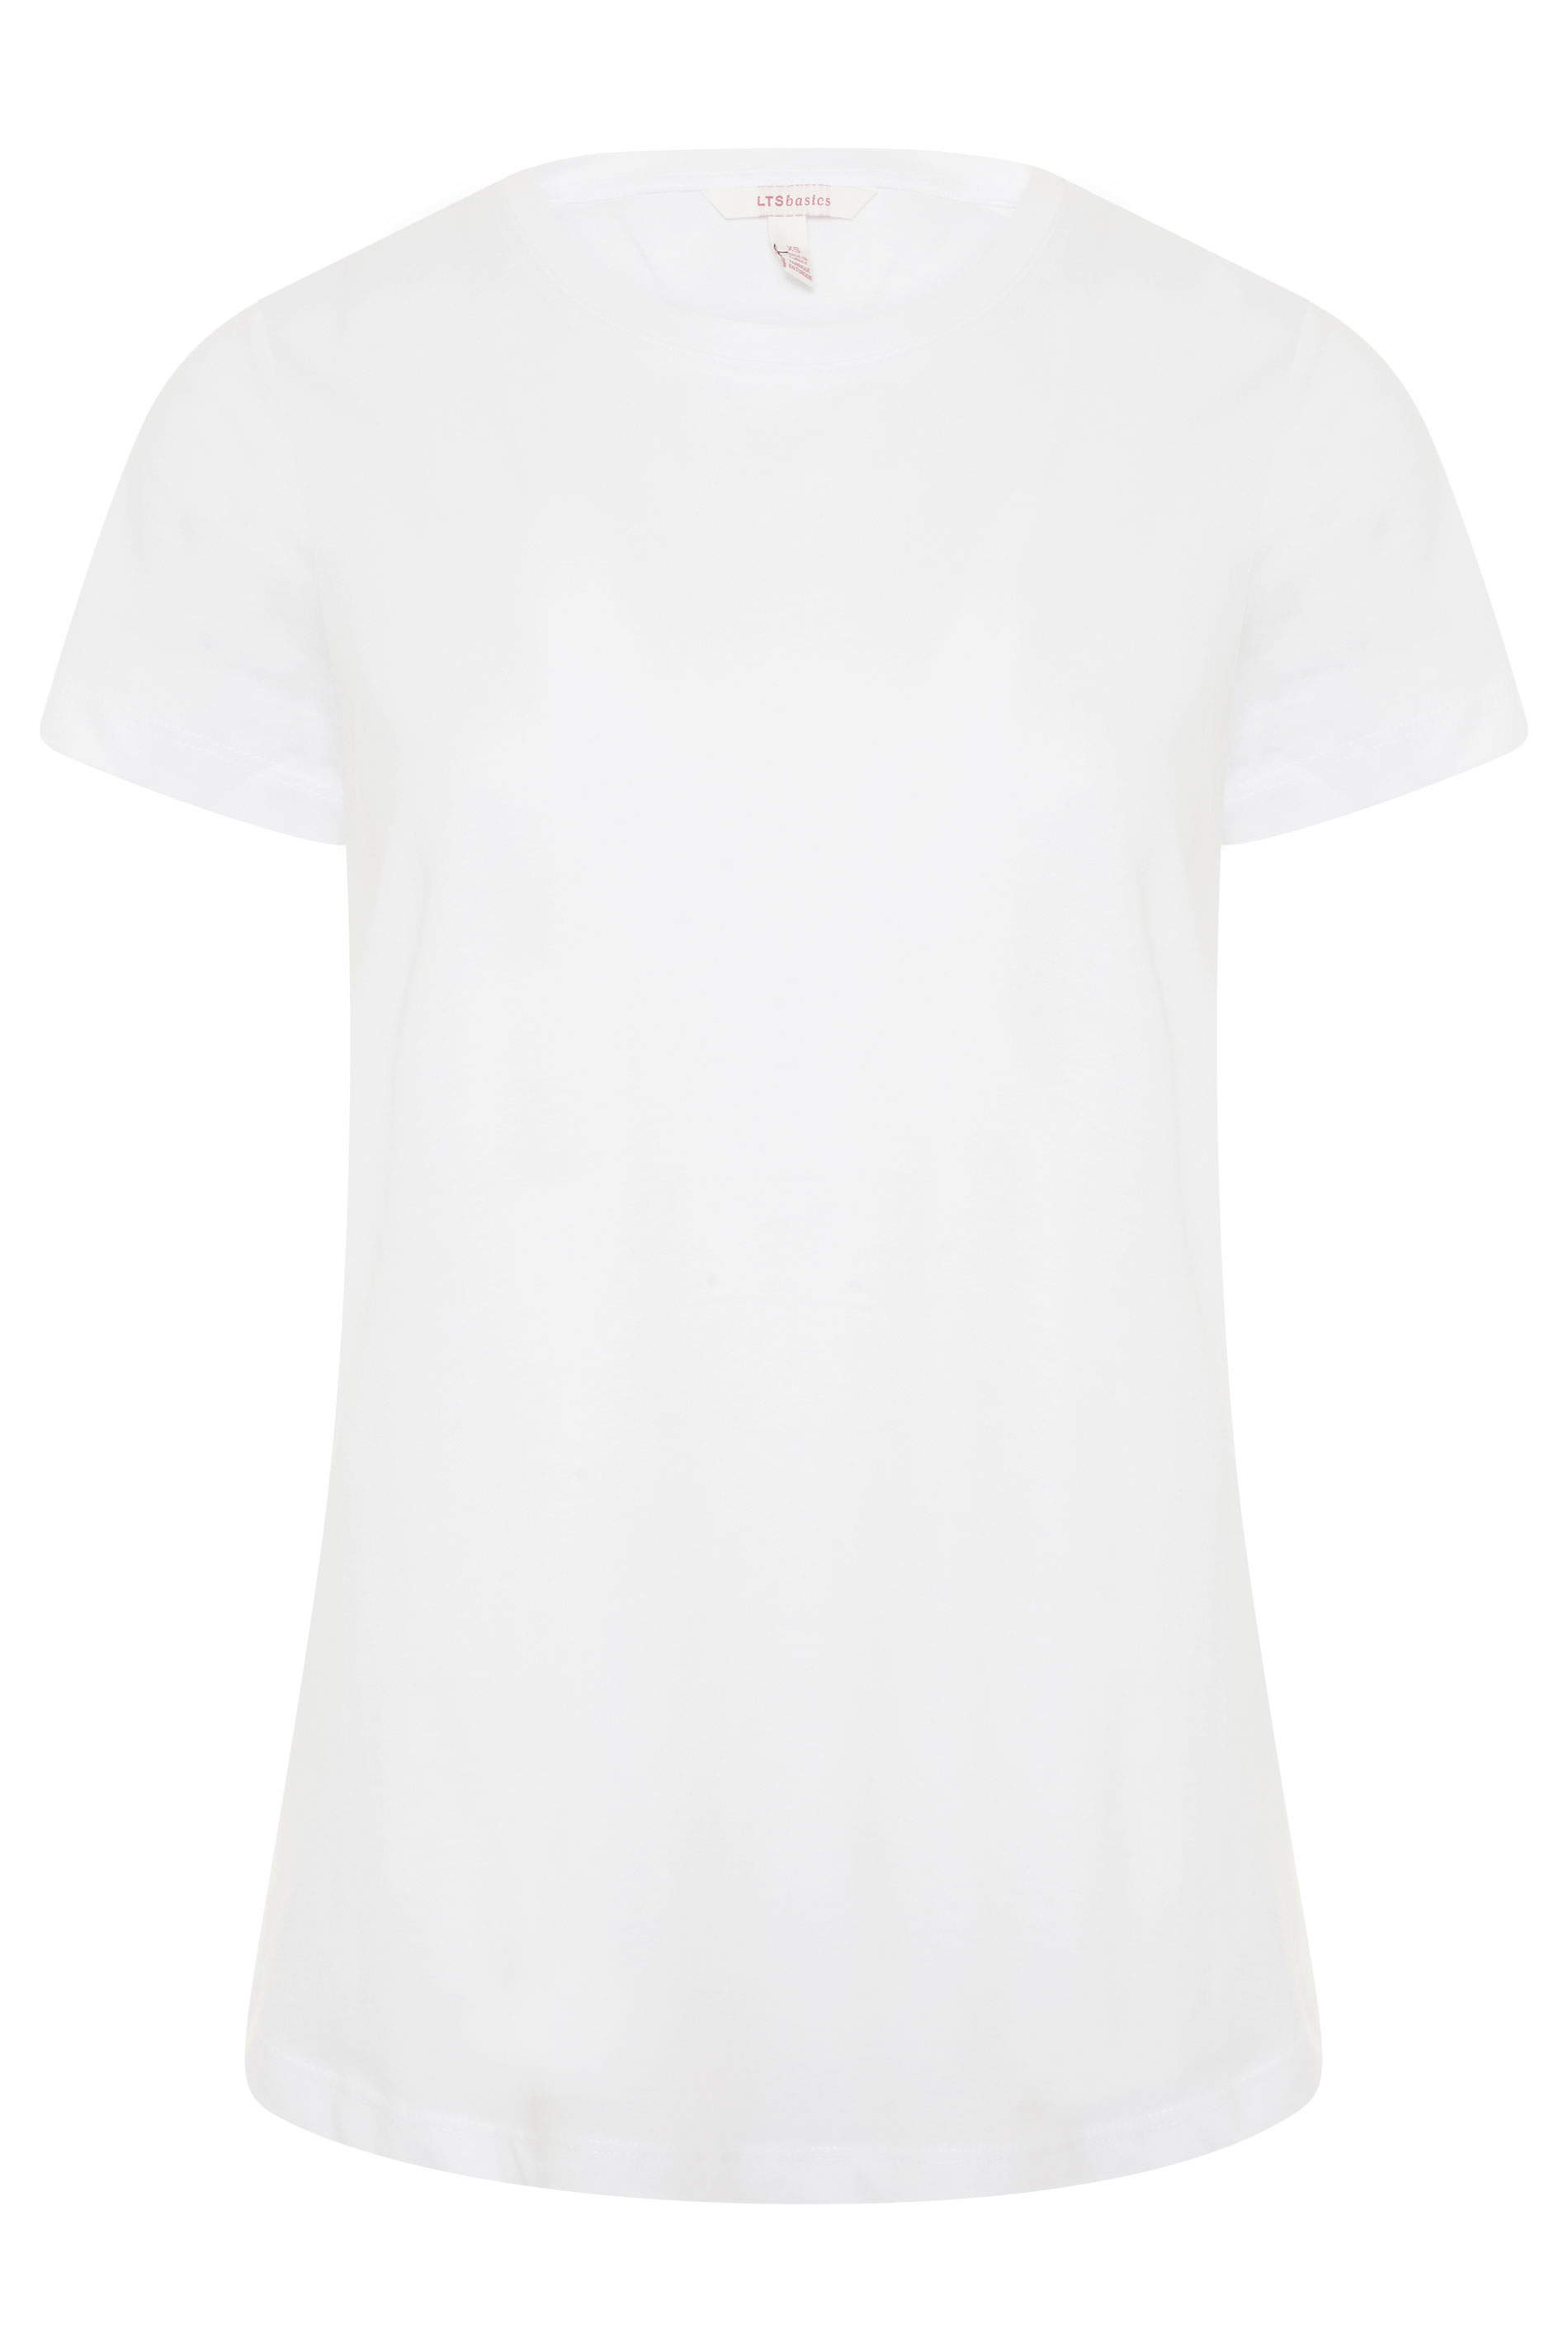 White Cotton Easy T-shirt | Long Tall Sally